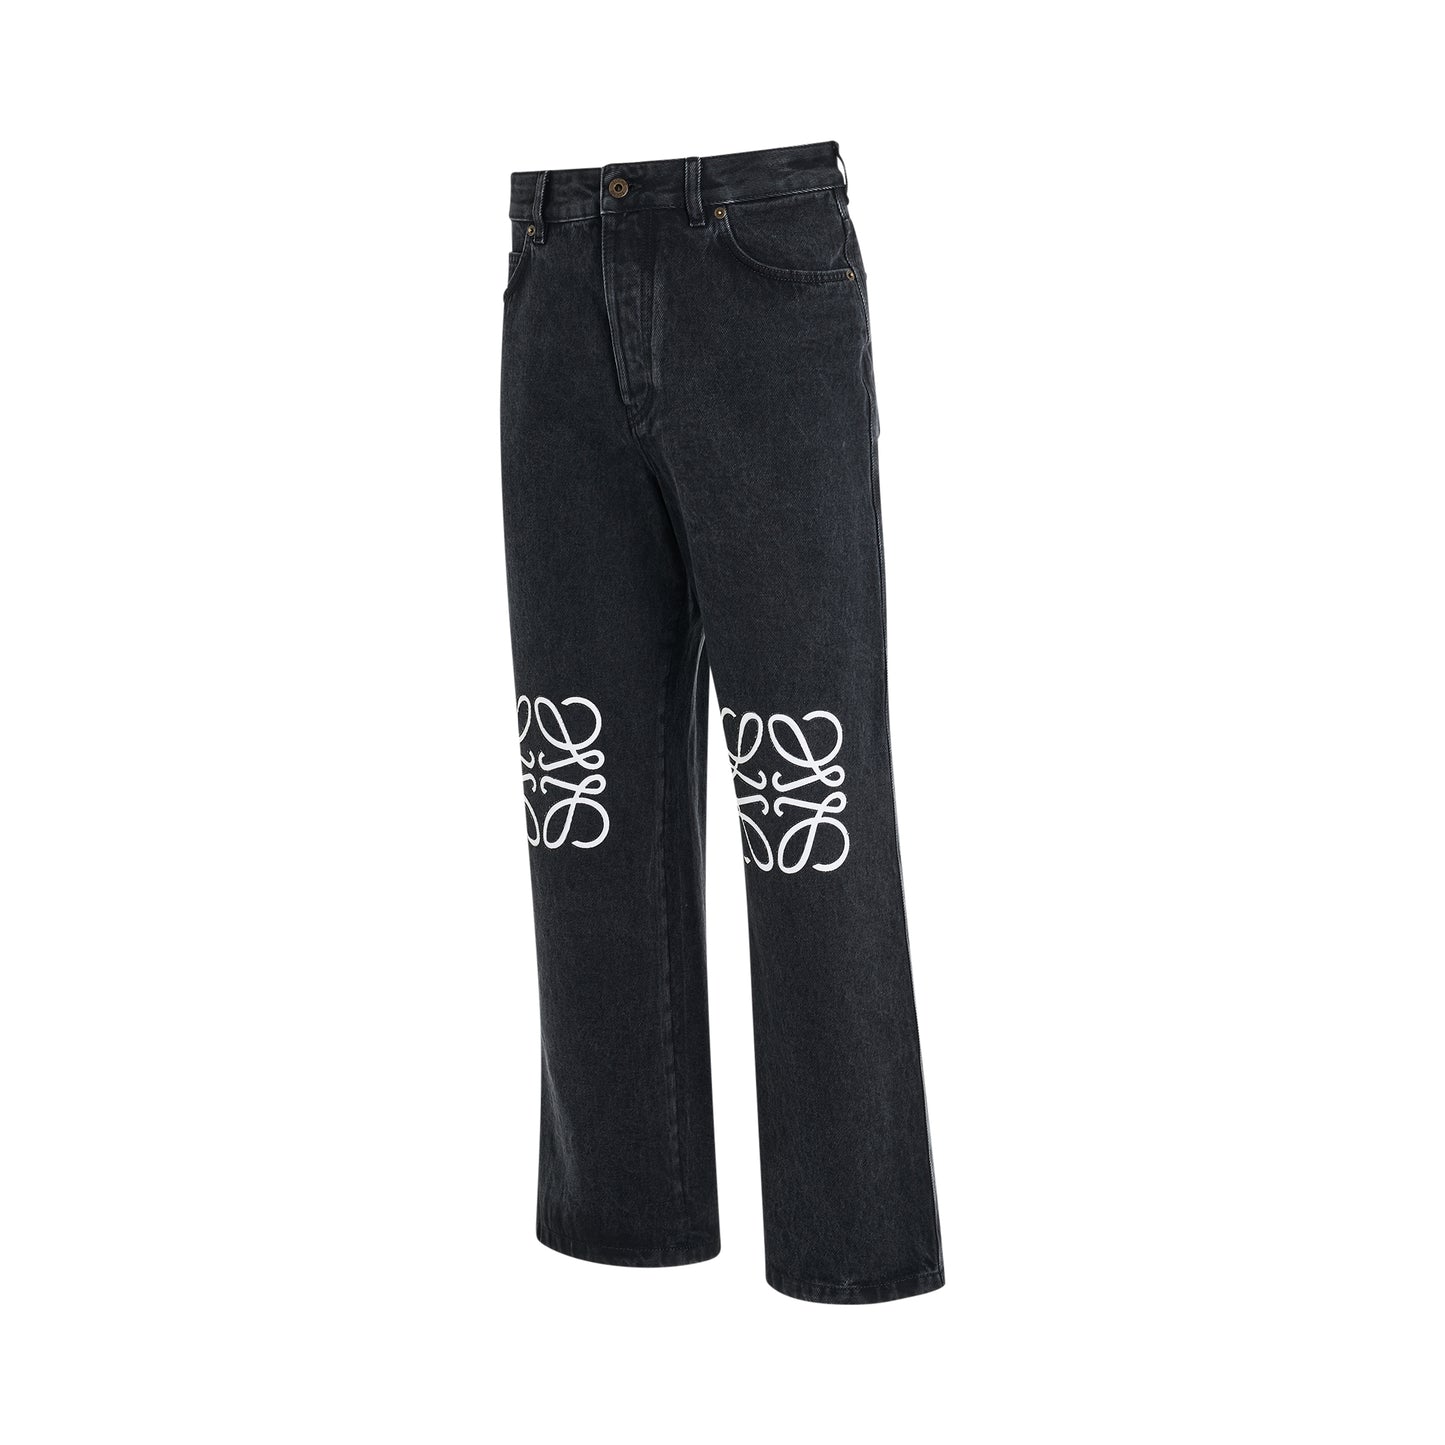 Anagram Baggy Jeans in Black Denim